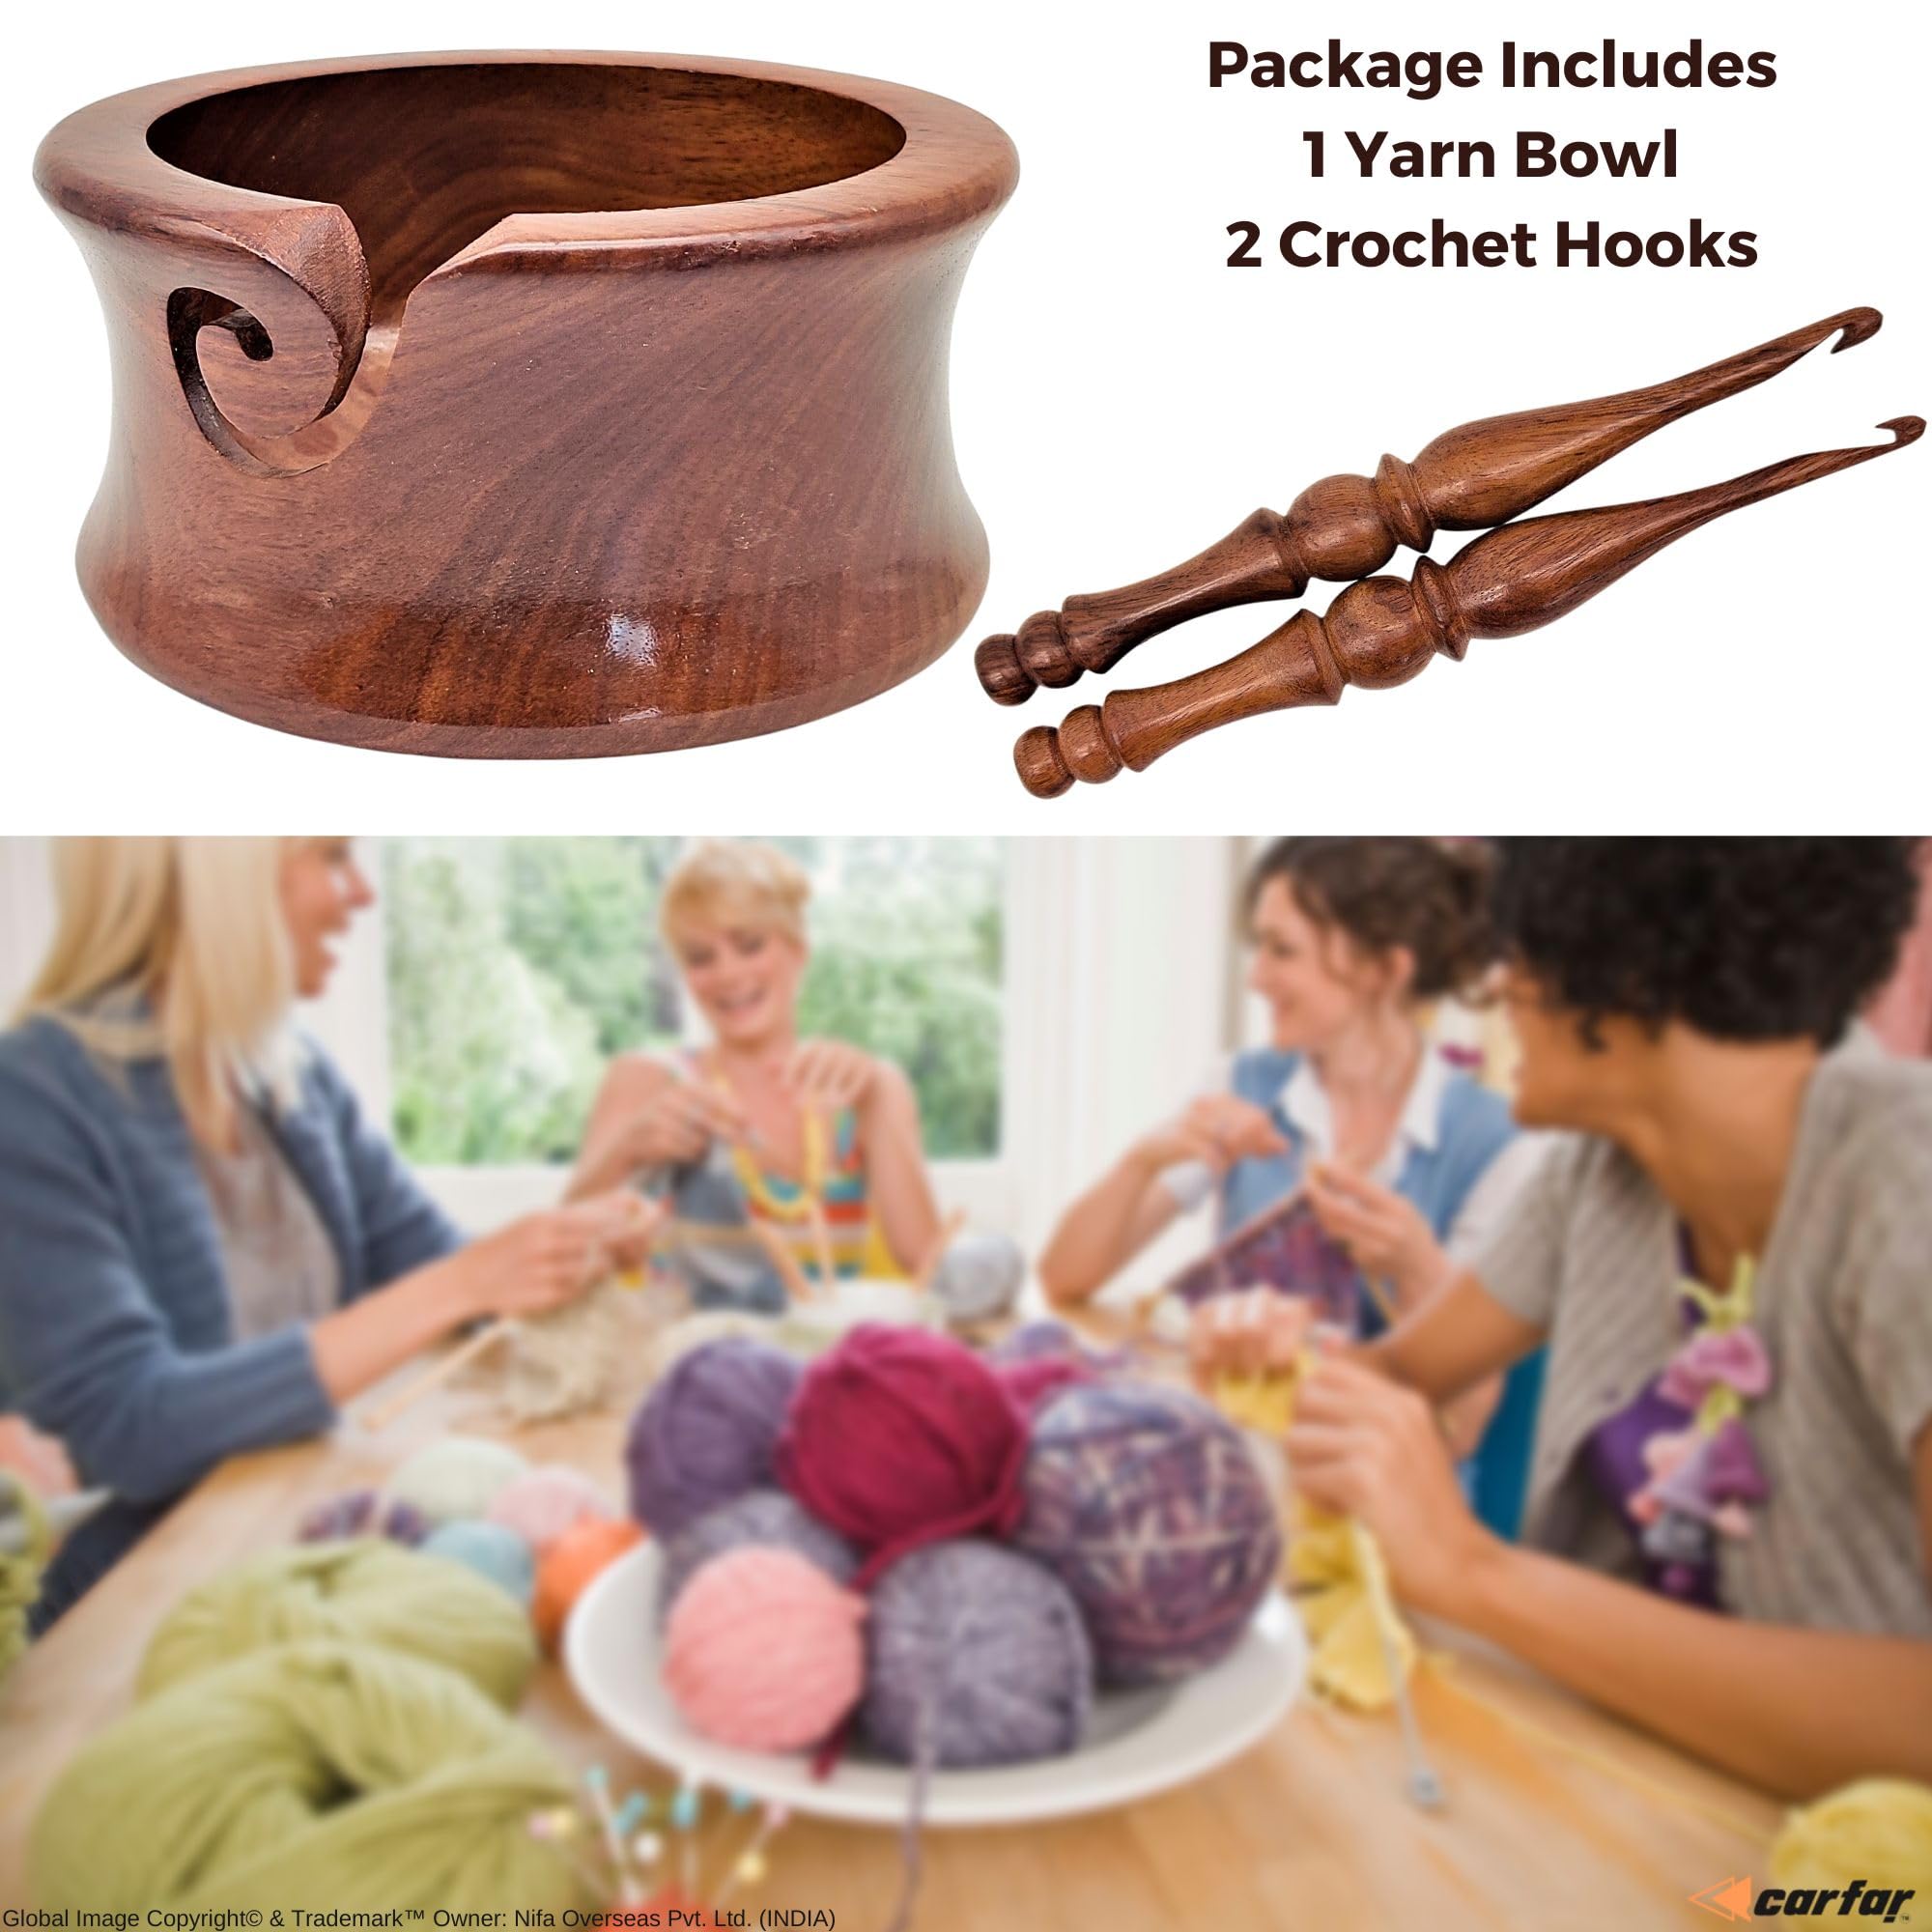 Carfar Knitting Yarn Bowl & Crochet Hooks Set Handmade Wooden Yarn Holder Bowl for Craft Crocheting and Knitting